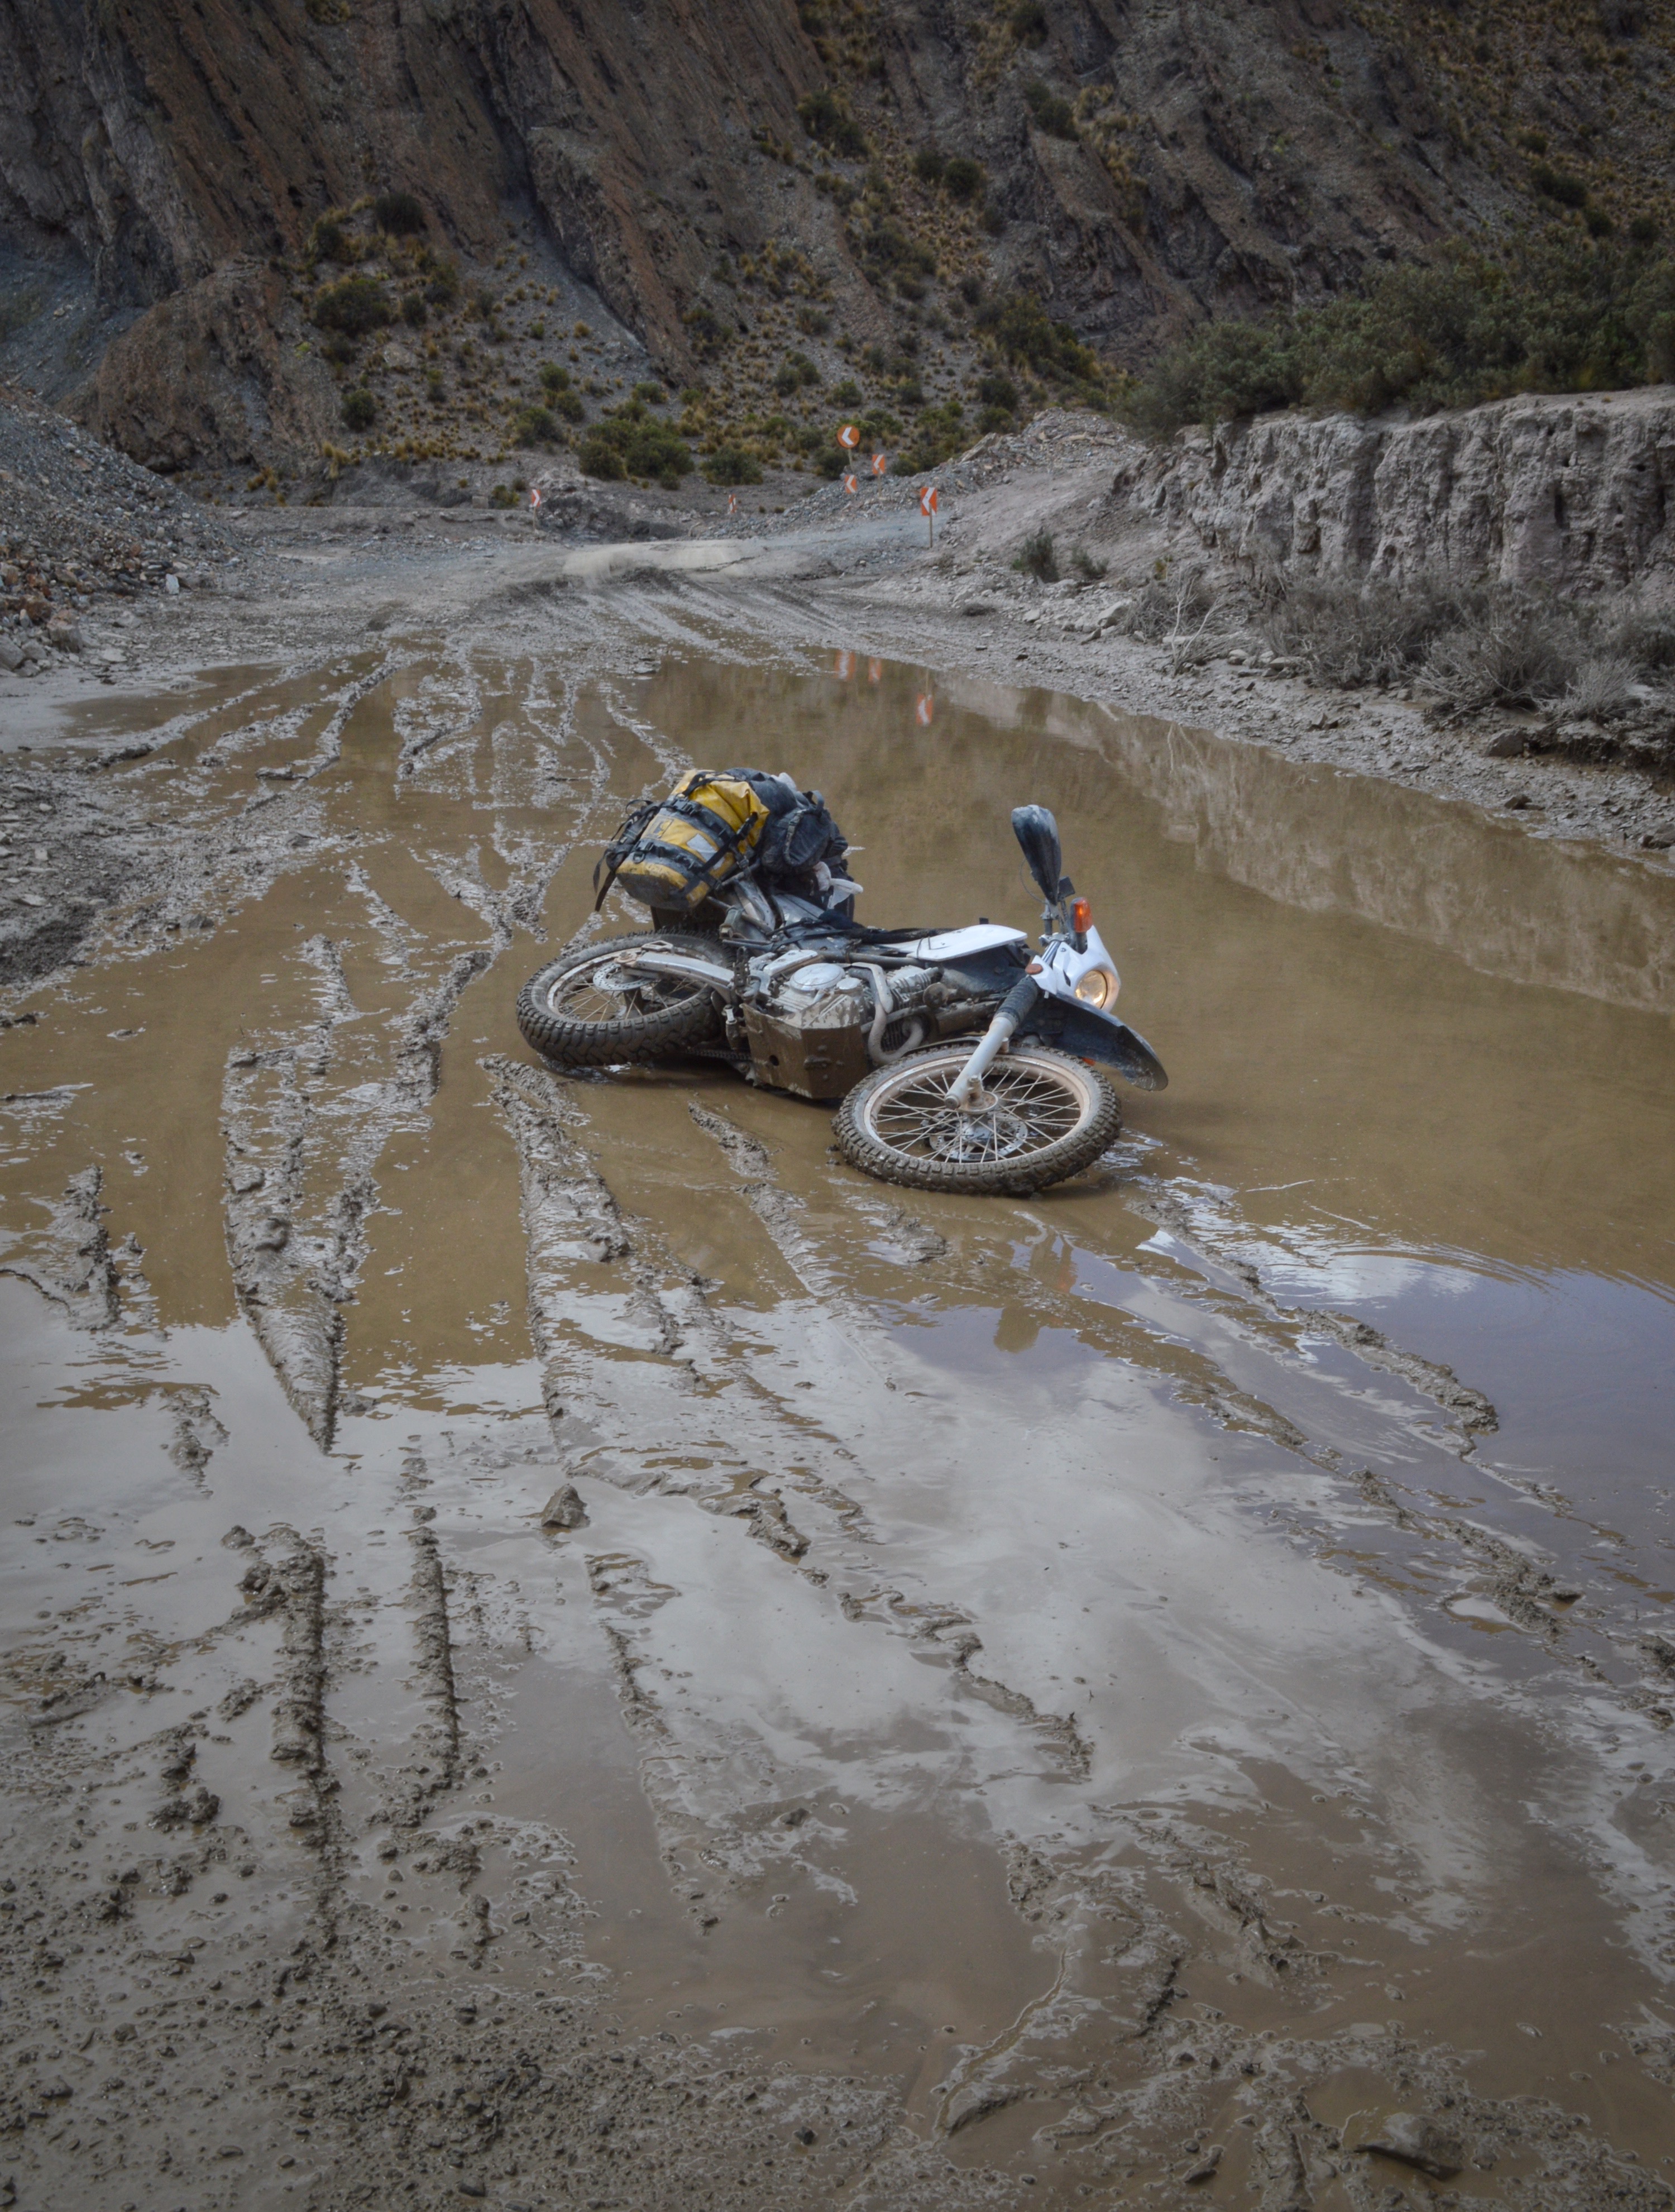 Johnson's motorcycle down in mud on Carretera Uyuni Tupiza